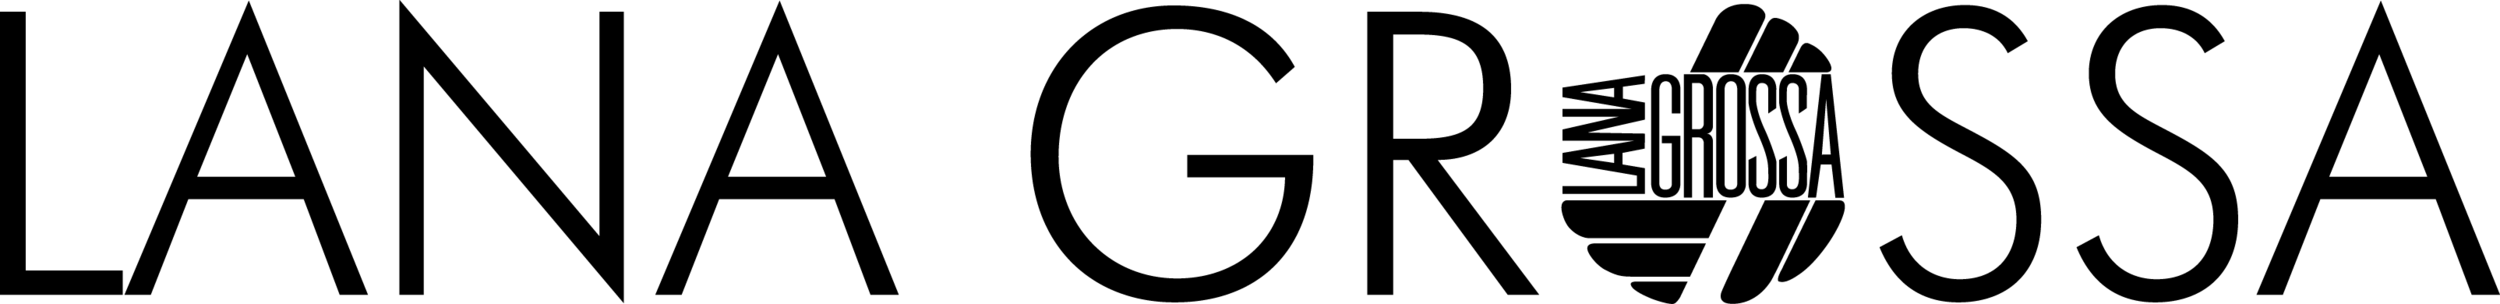 Logo_LanaGrossa_black_quer.png